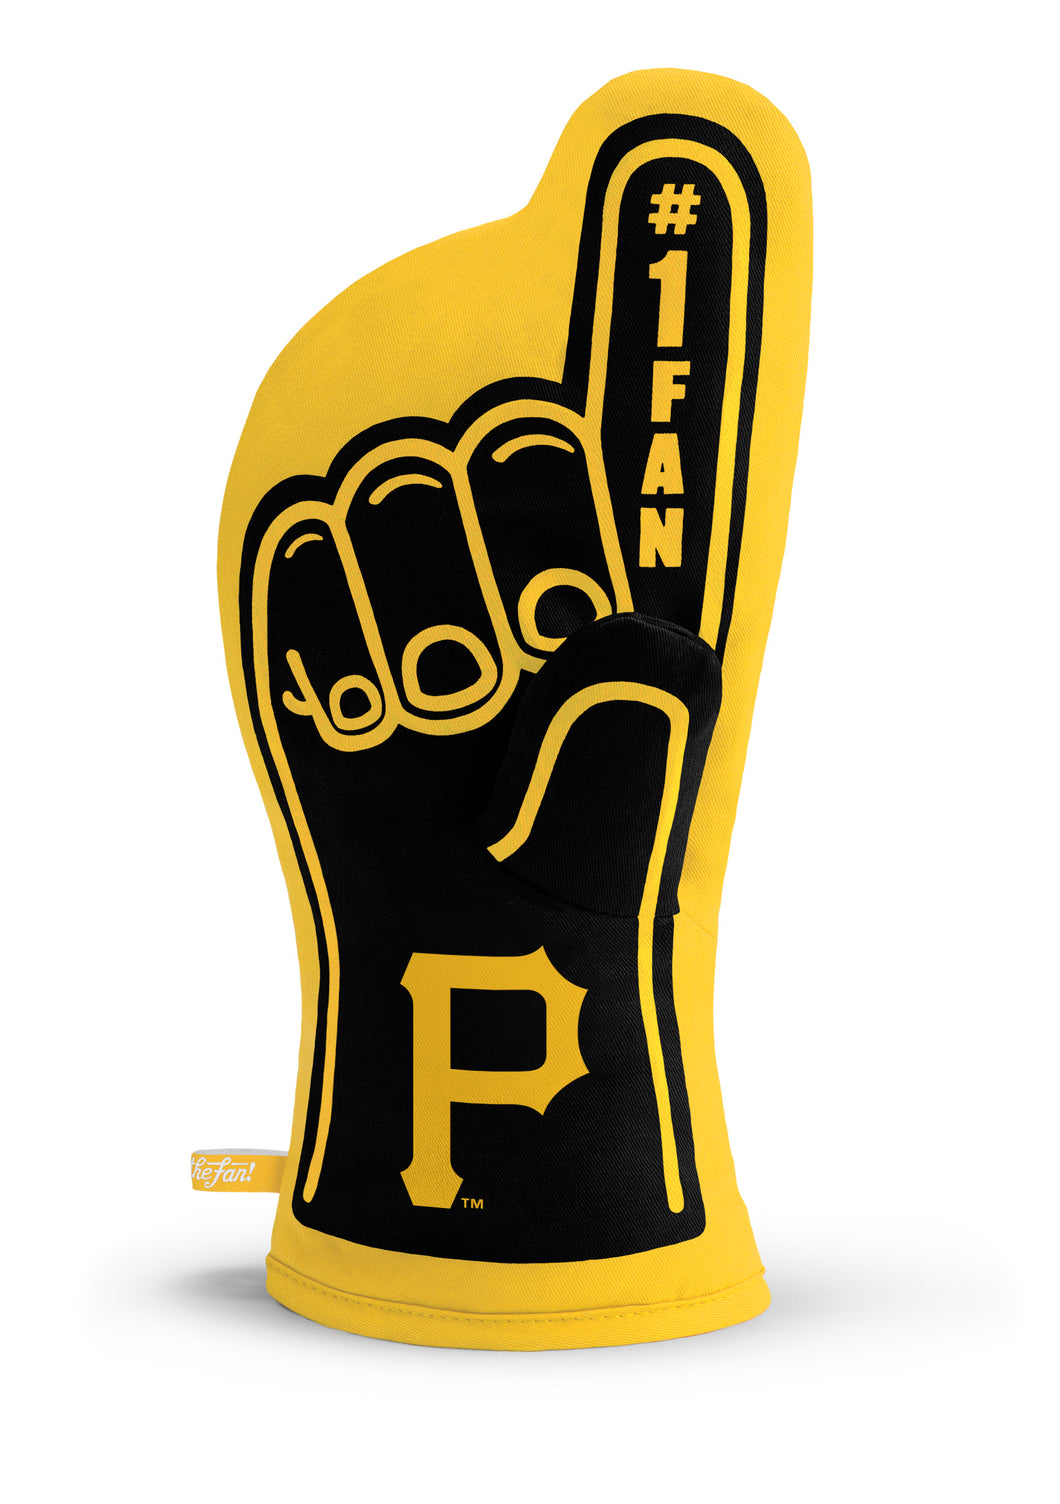 Pittsburgh Pirates #1 Fan Oven Mitt